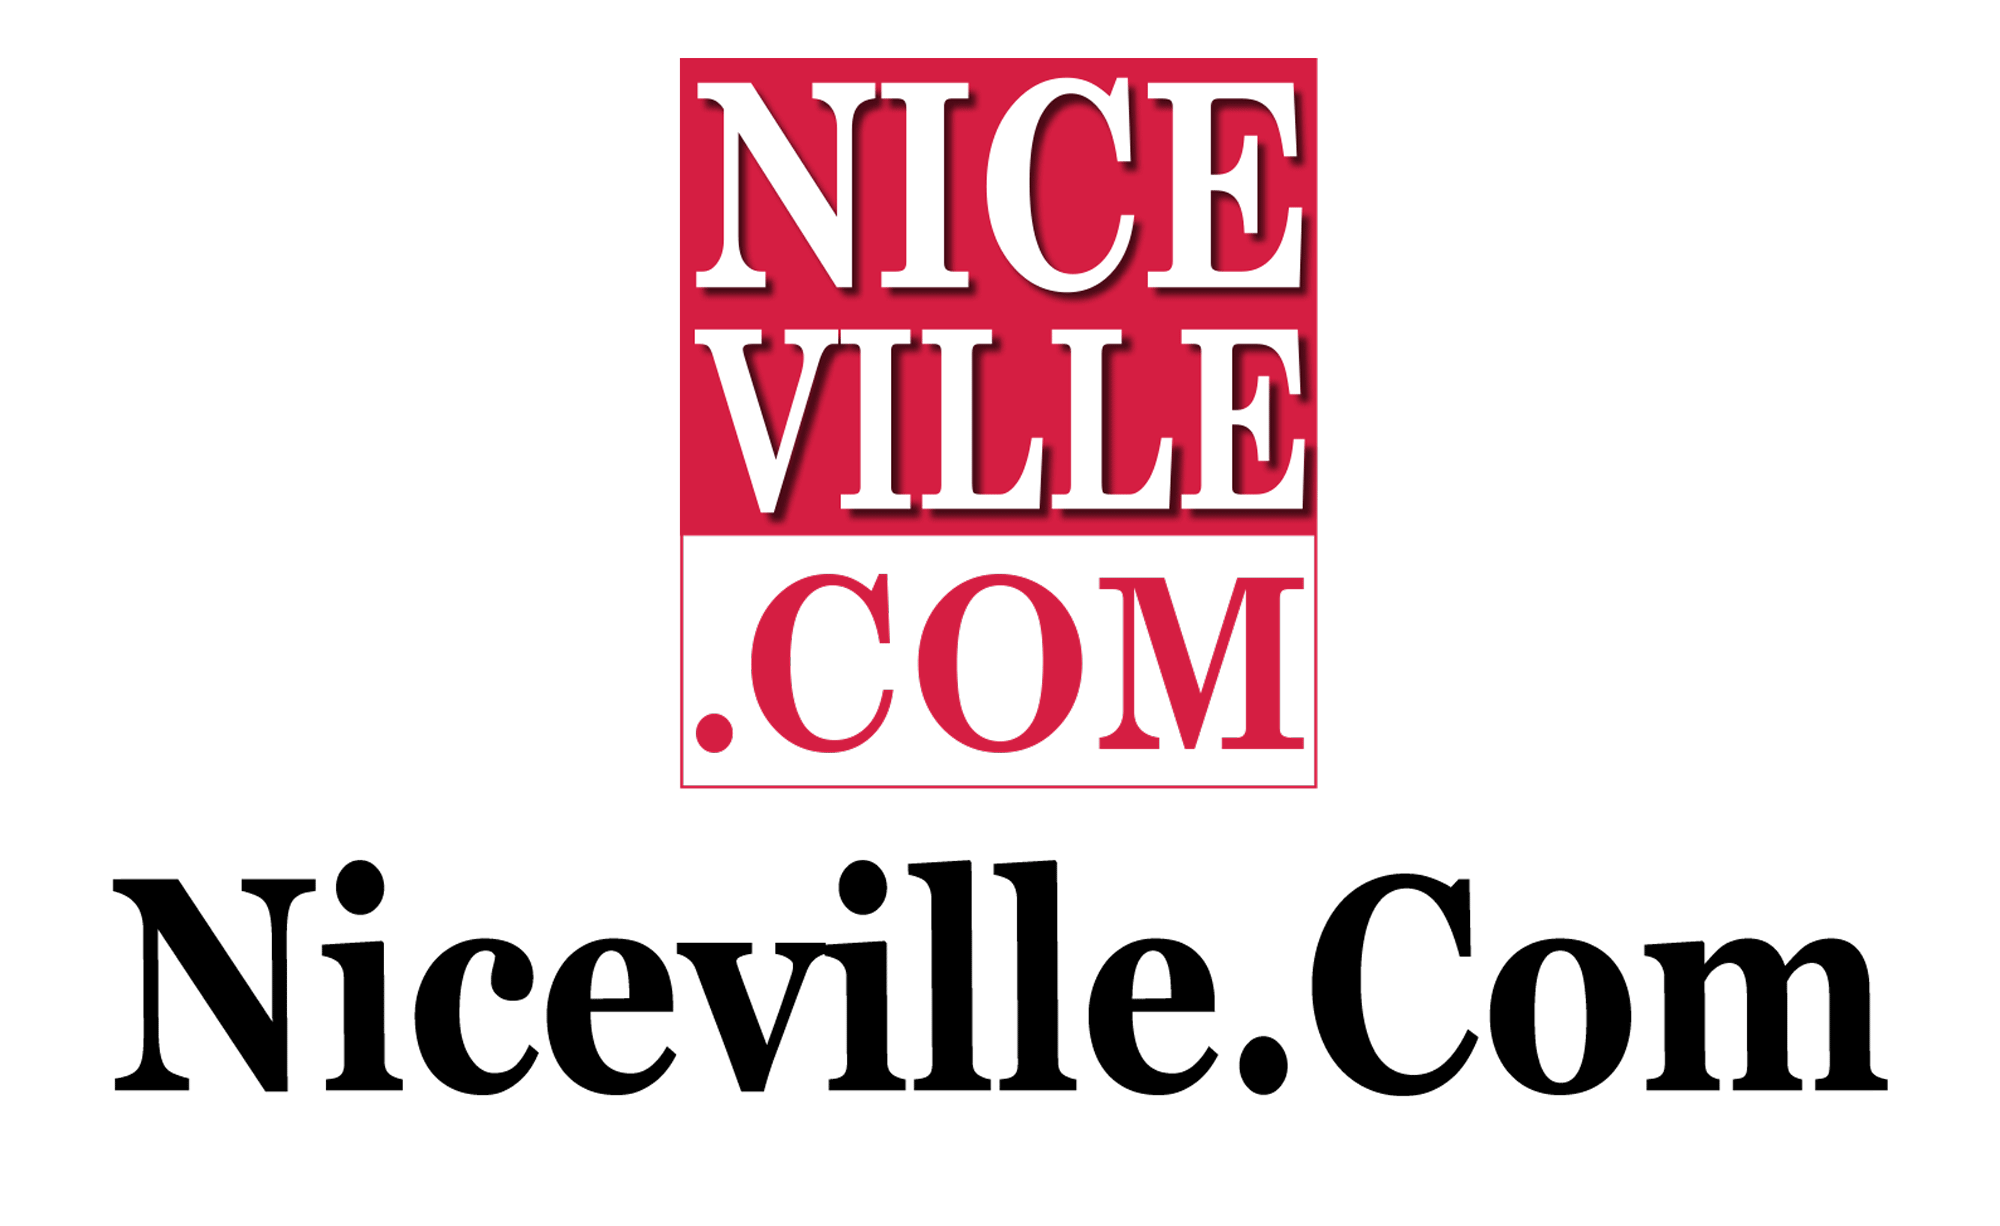 Niceville.com